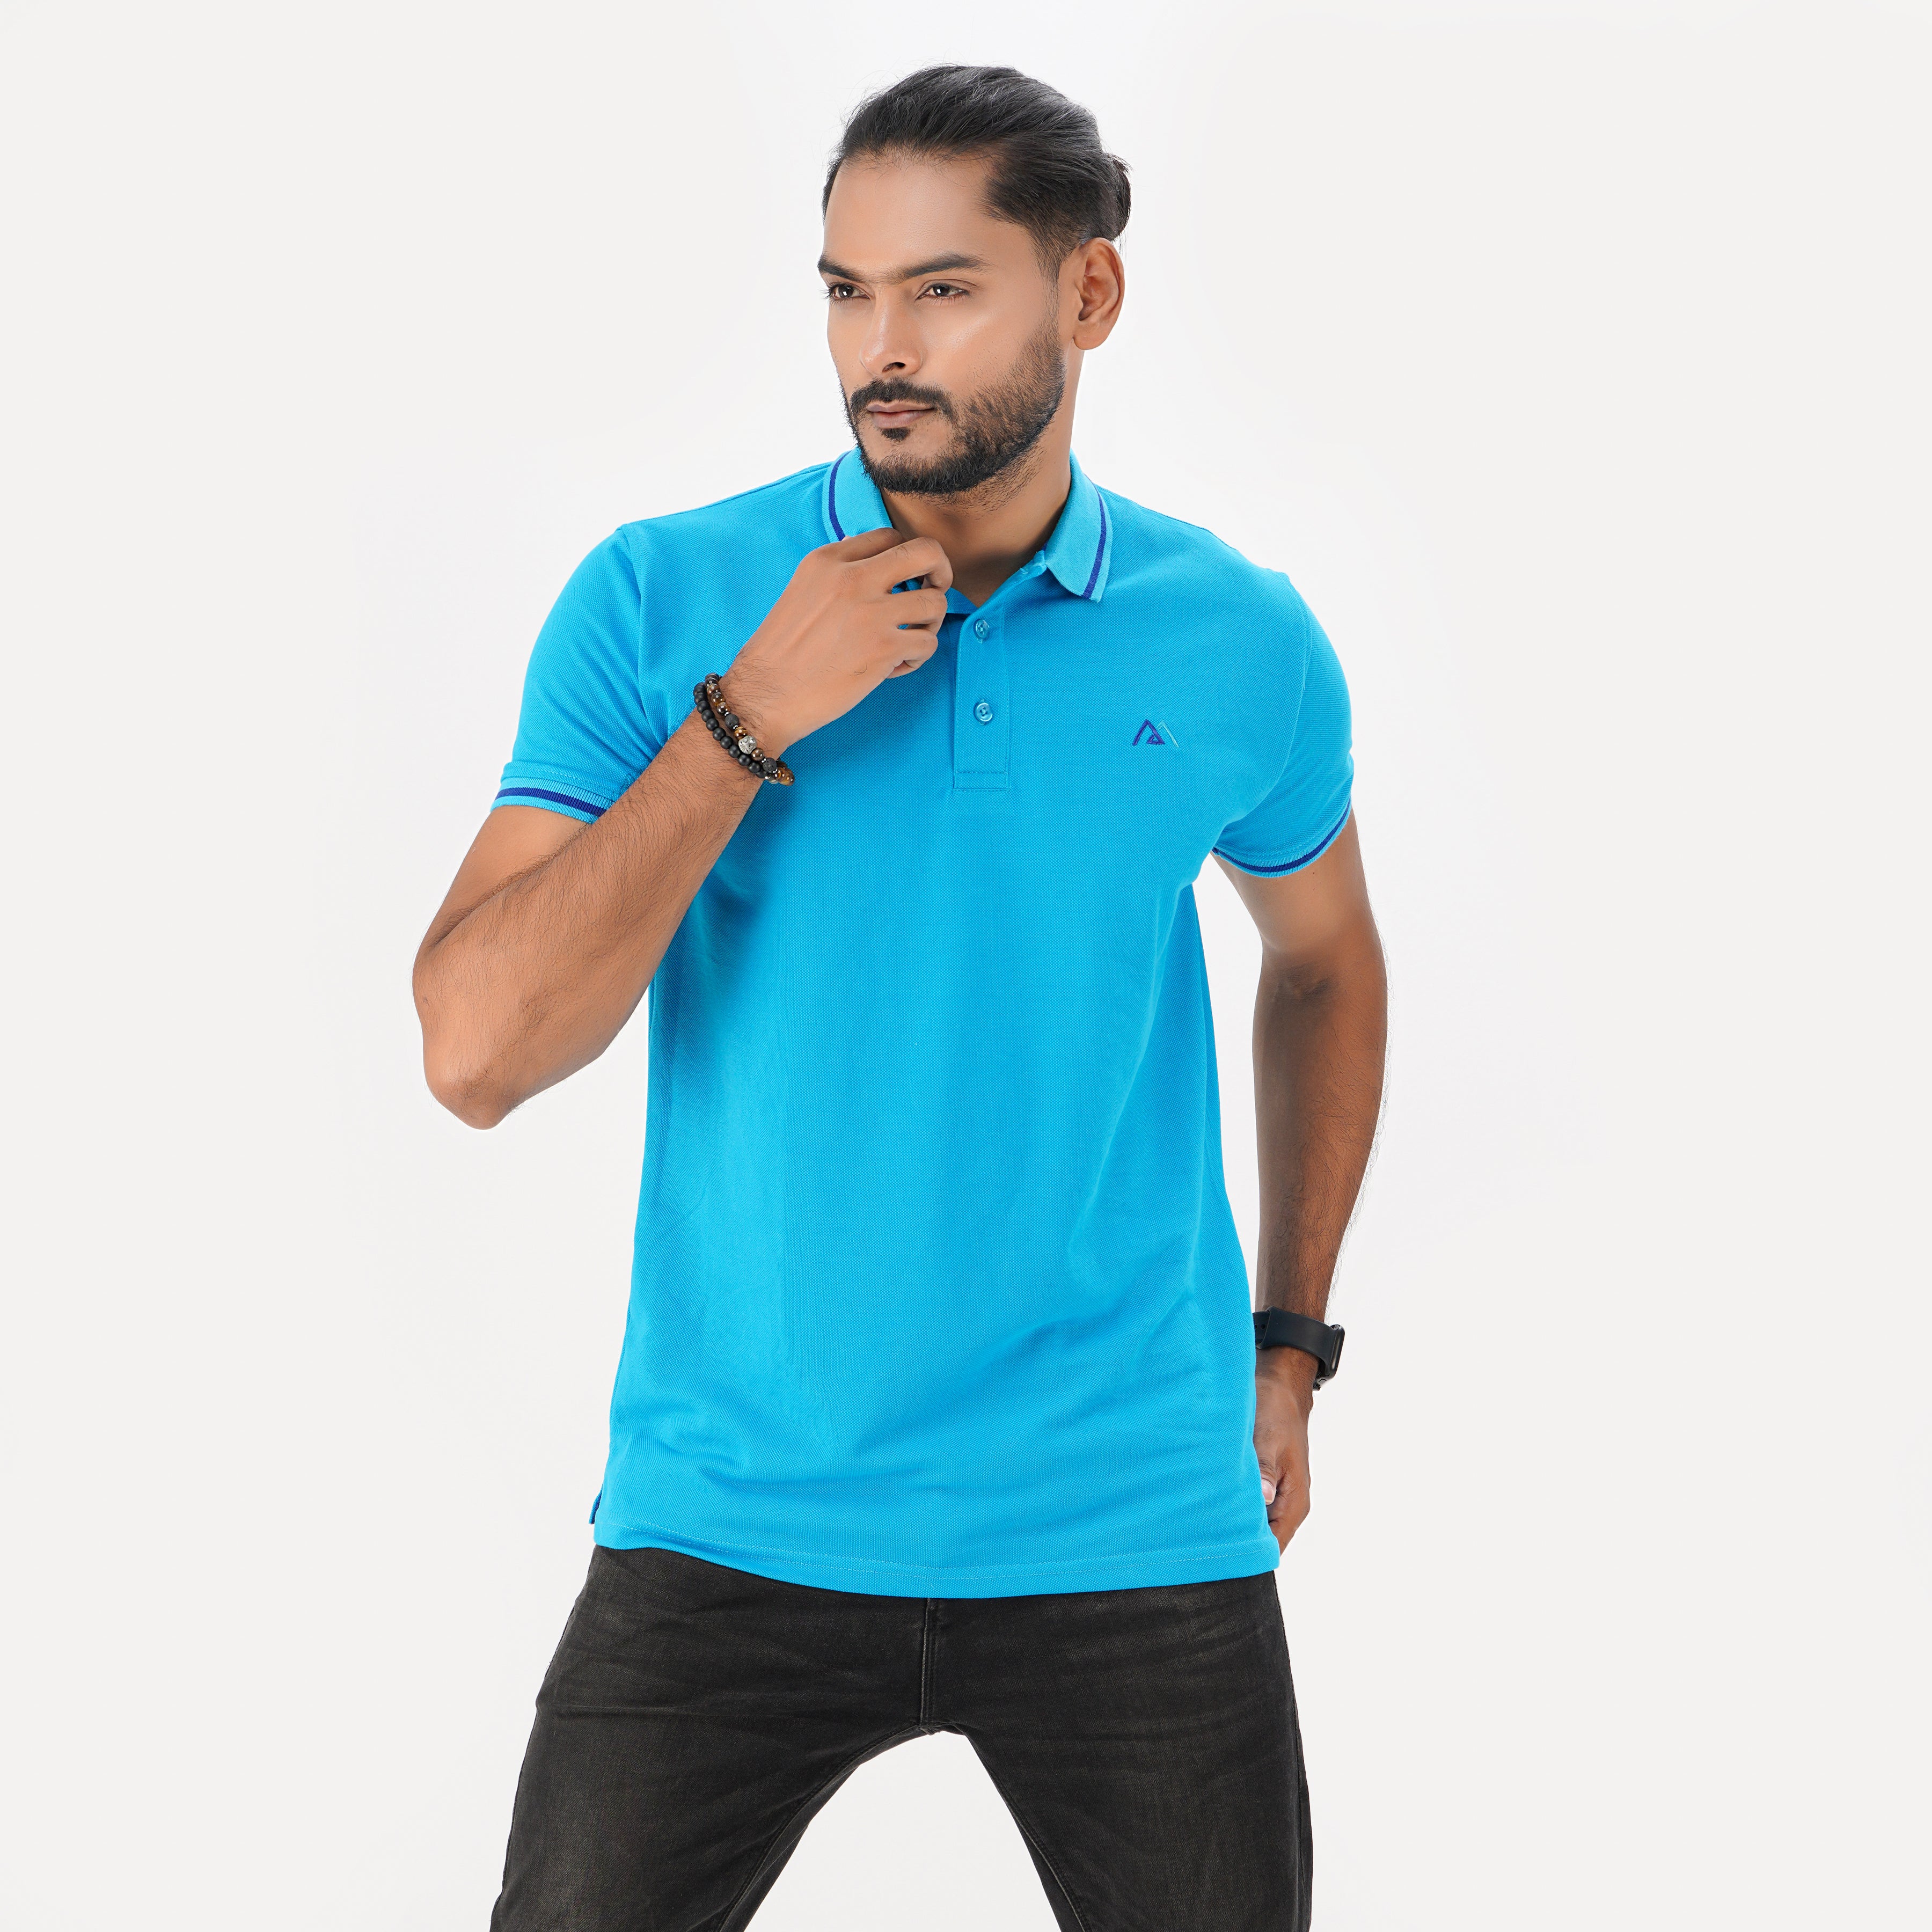 Polo Shirt for Men | Solid Light Blue Polo